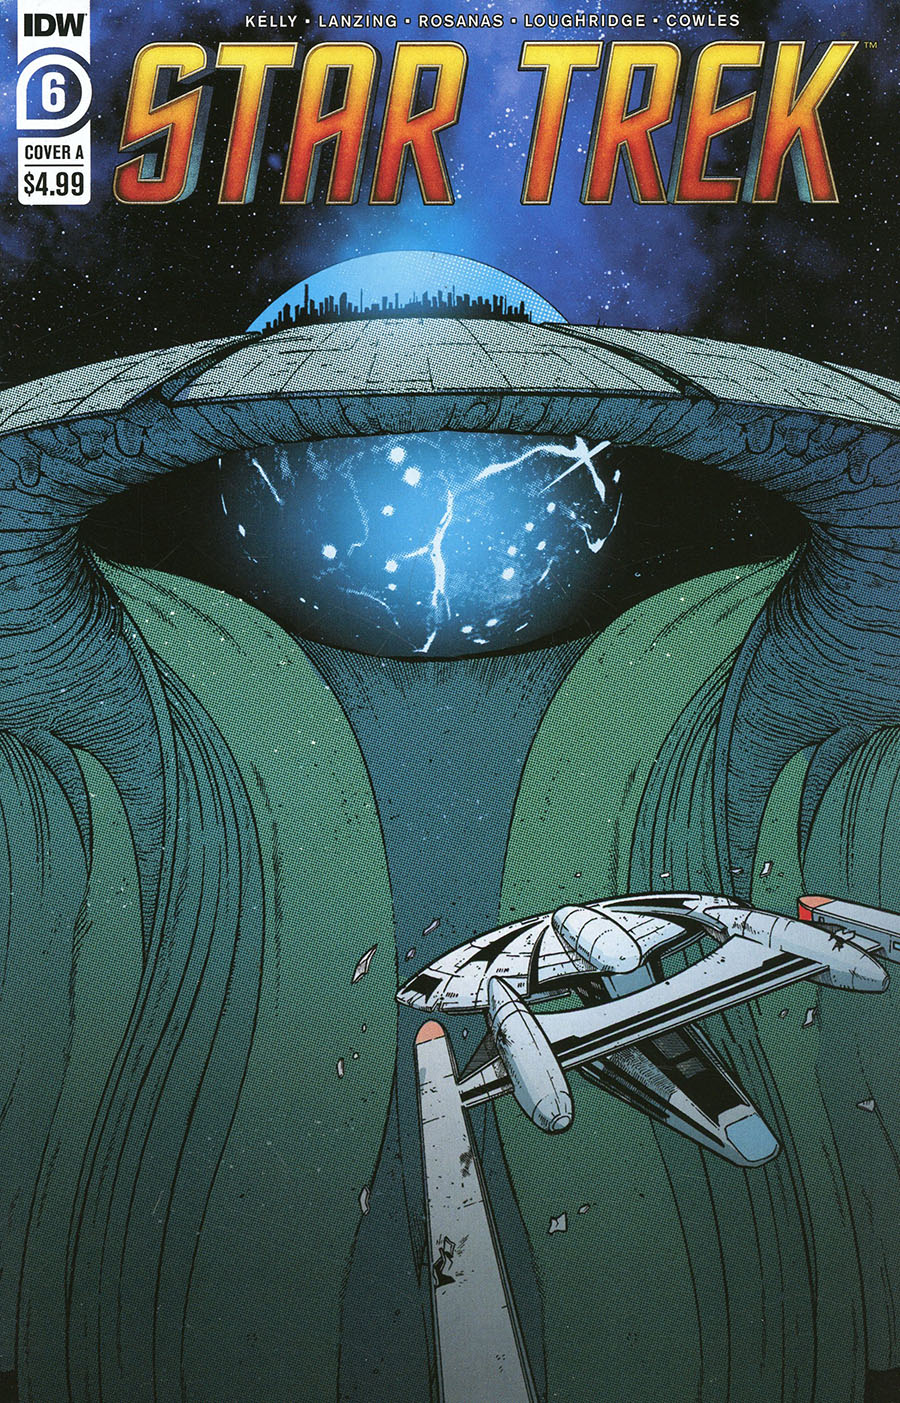 Star Trek (IDW) Vol 2 #6 Cover A Regular Ramon Rosanas Cover